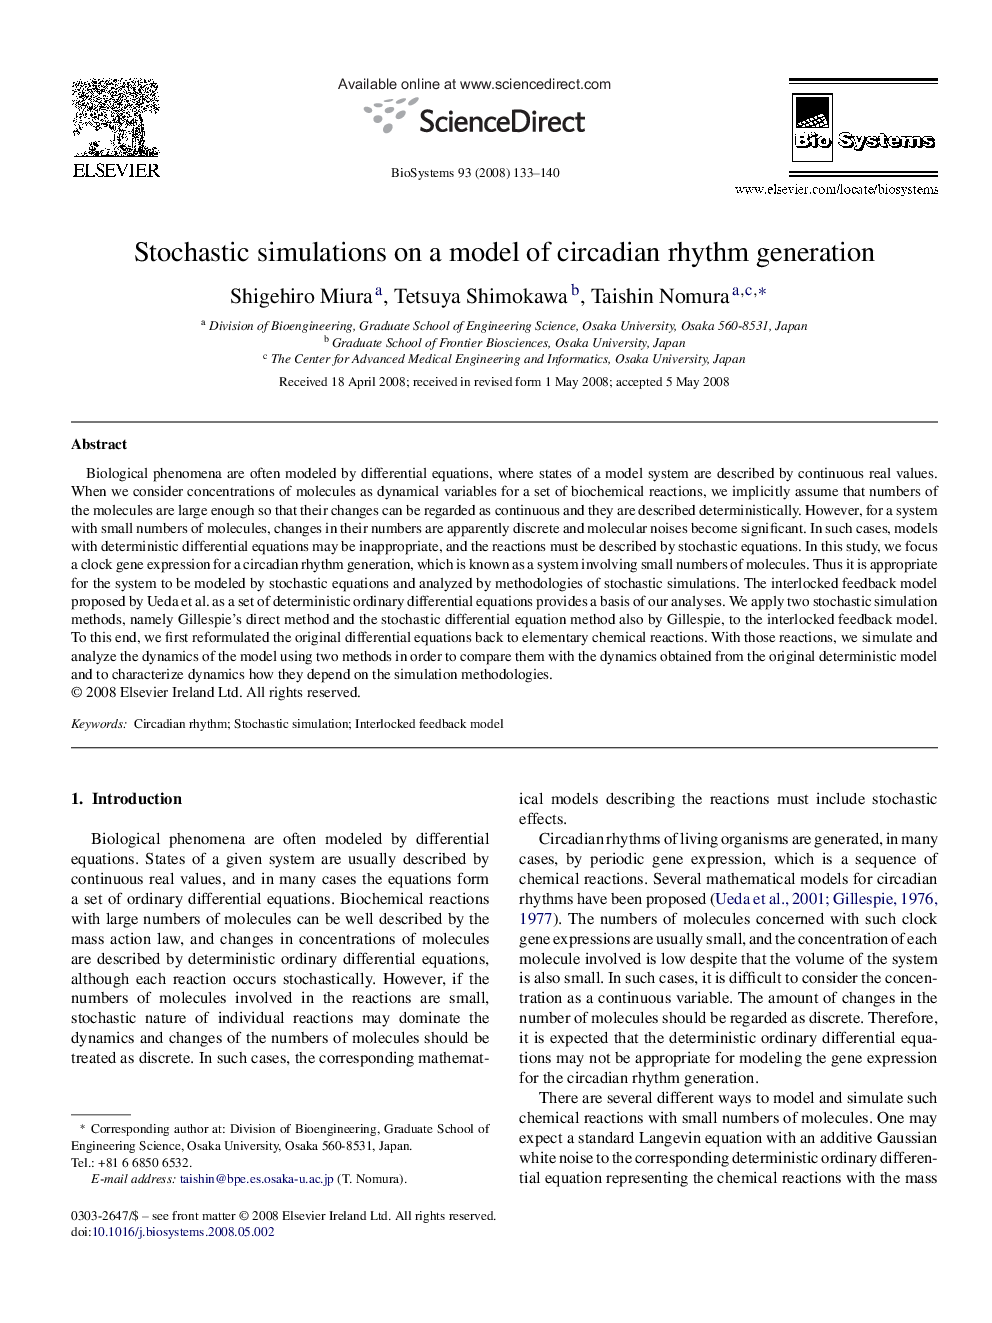 Stochastic simulations on a model of circadian rhythm generation